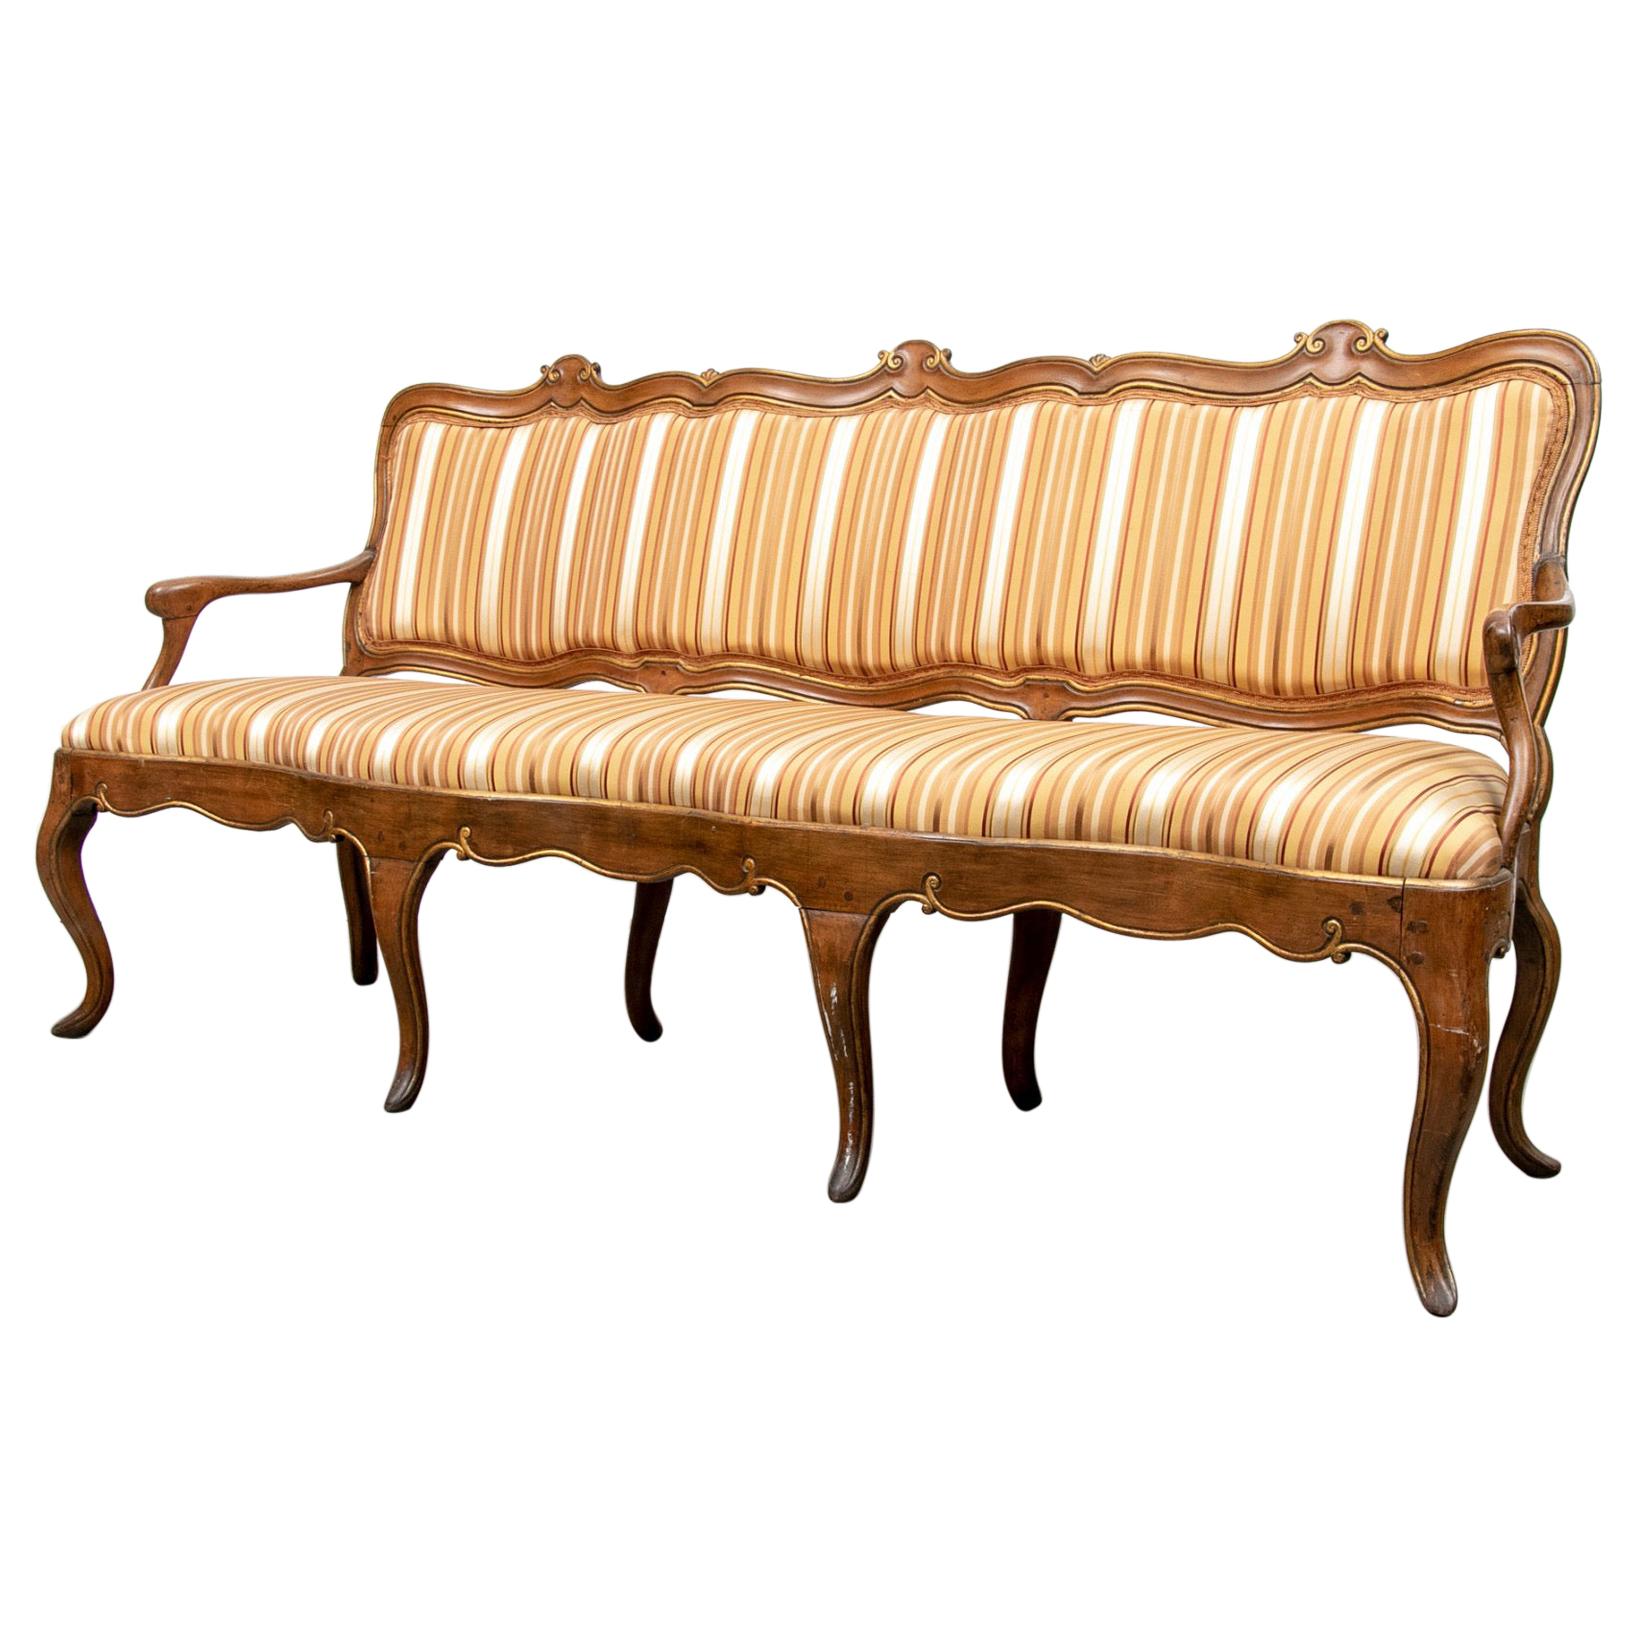 Late 18th C Swedish Walnut Sofa Upholstered in Striped Silk Fabric